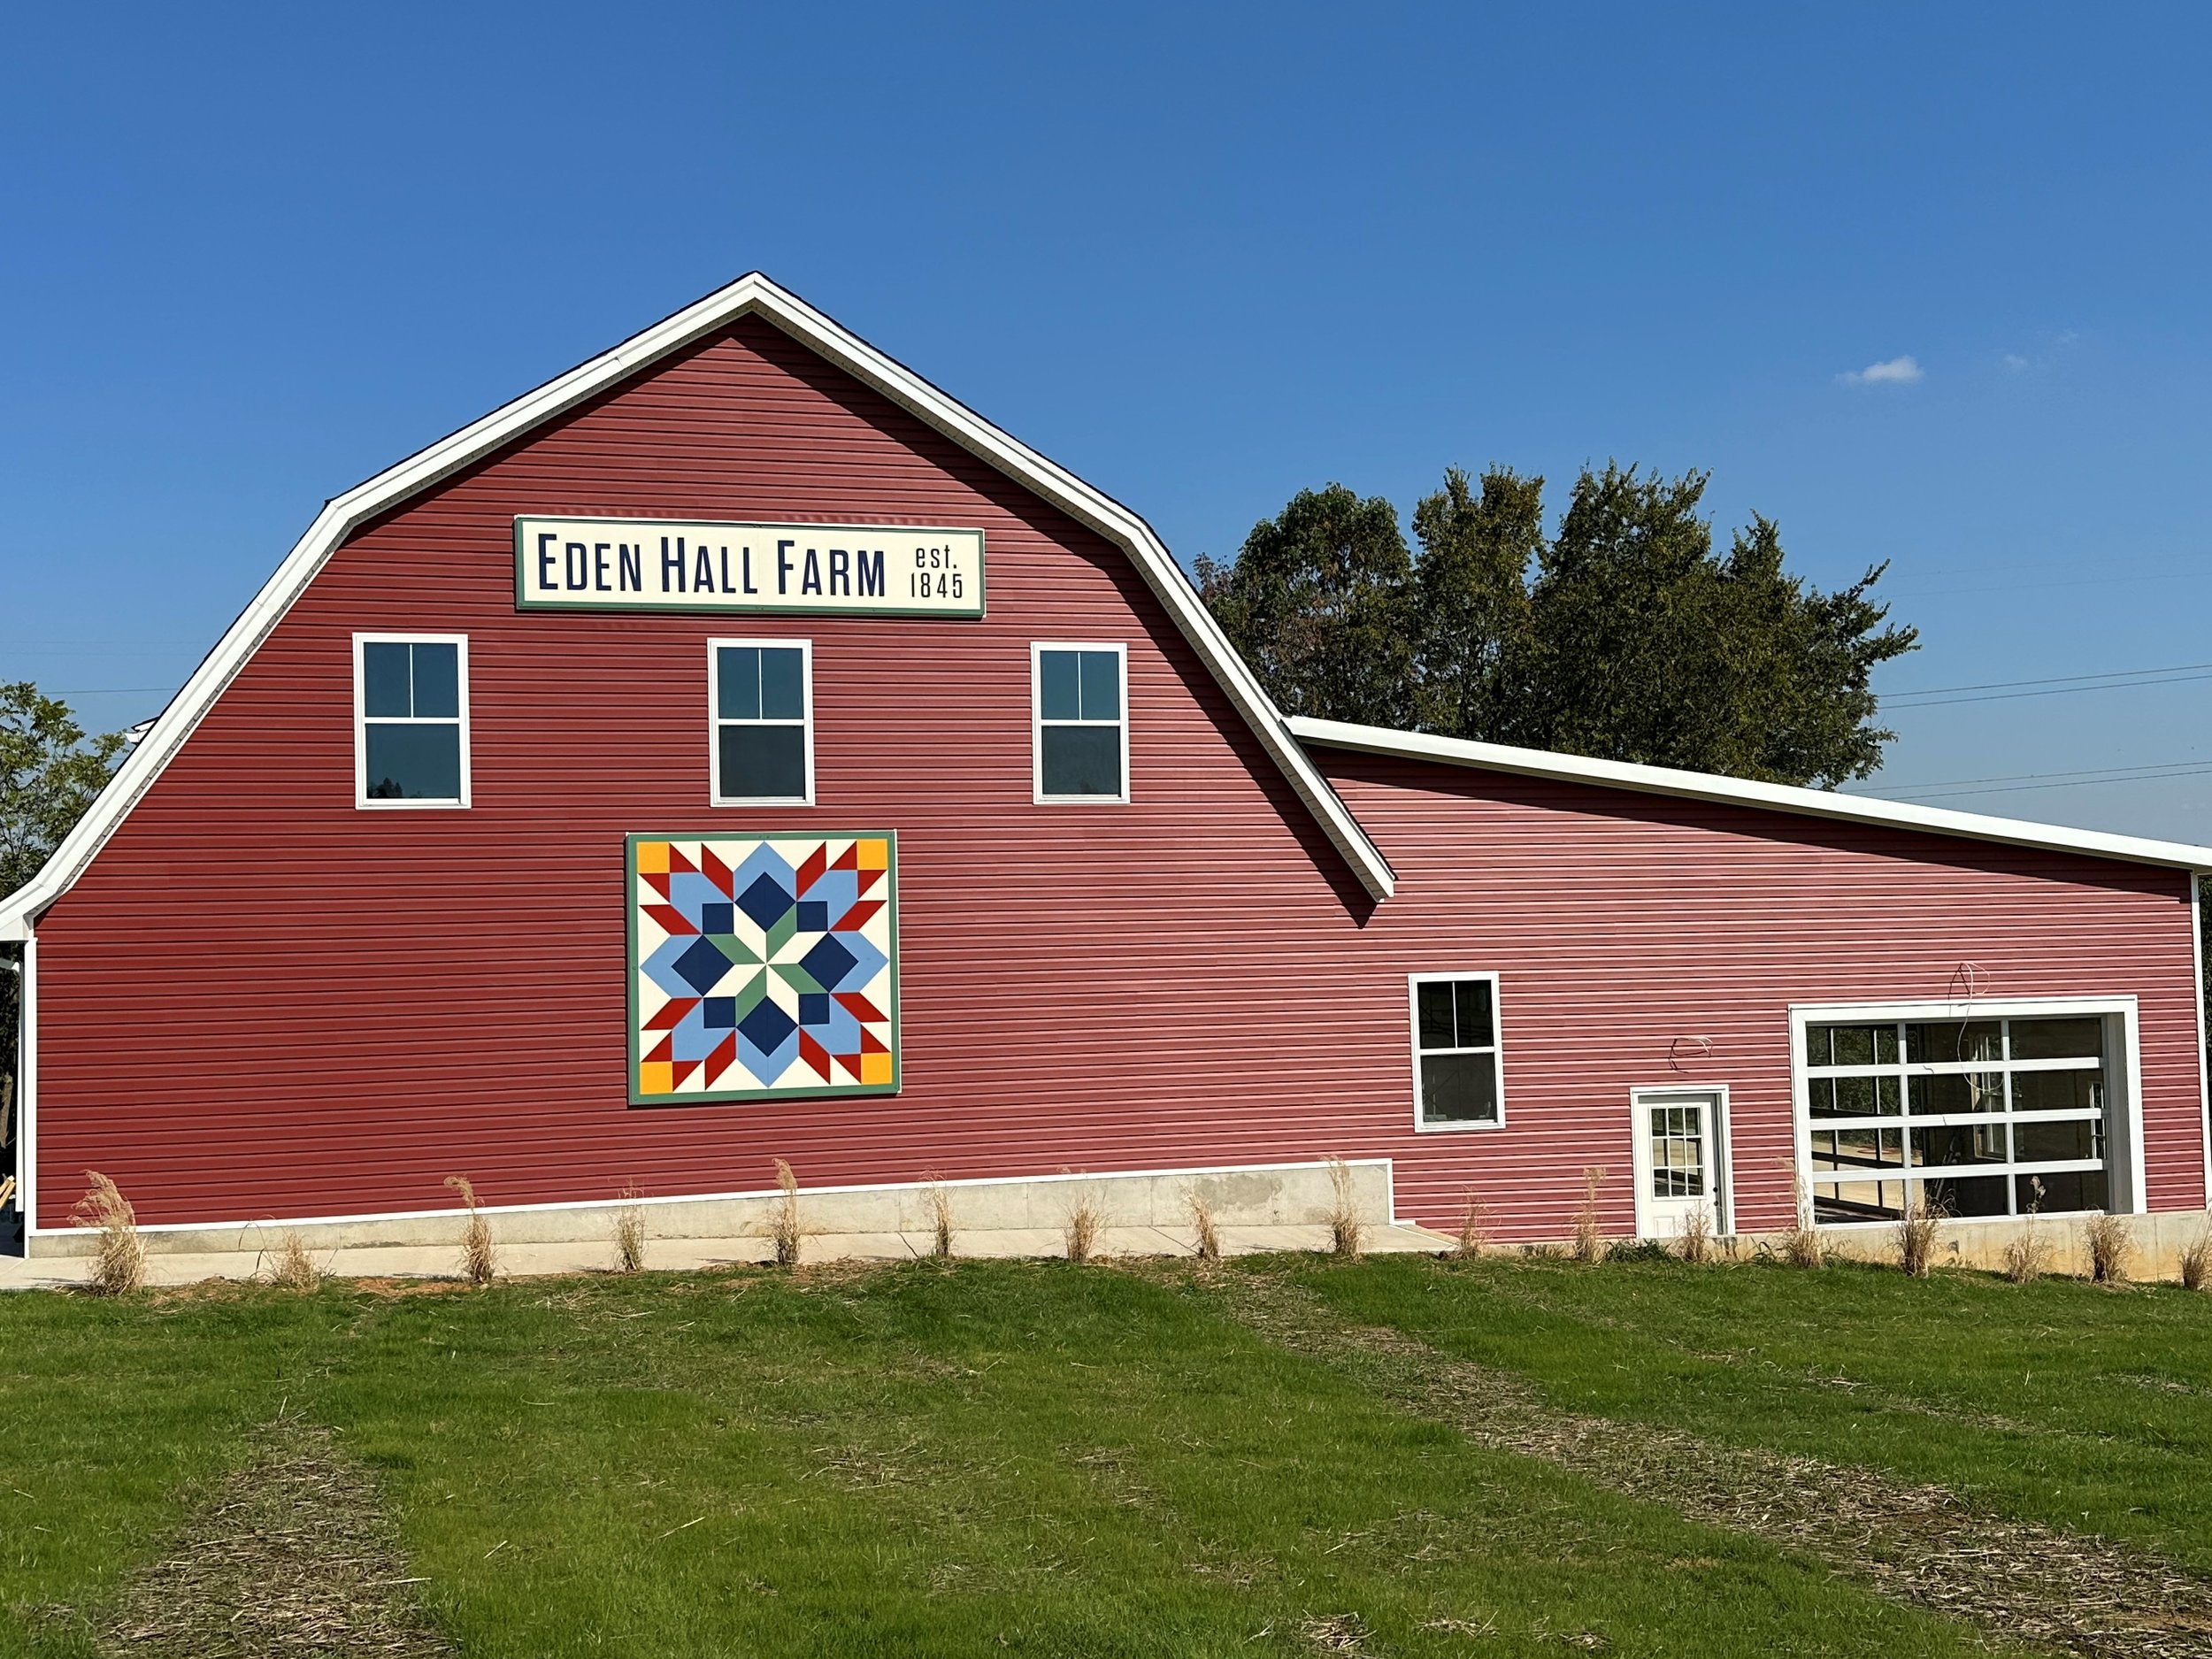 Eden Hall Farm 1845 and Colorful Prairie Star Americana  - Barn in Louisville, KY